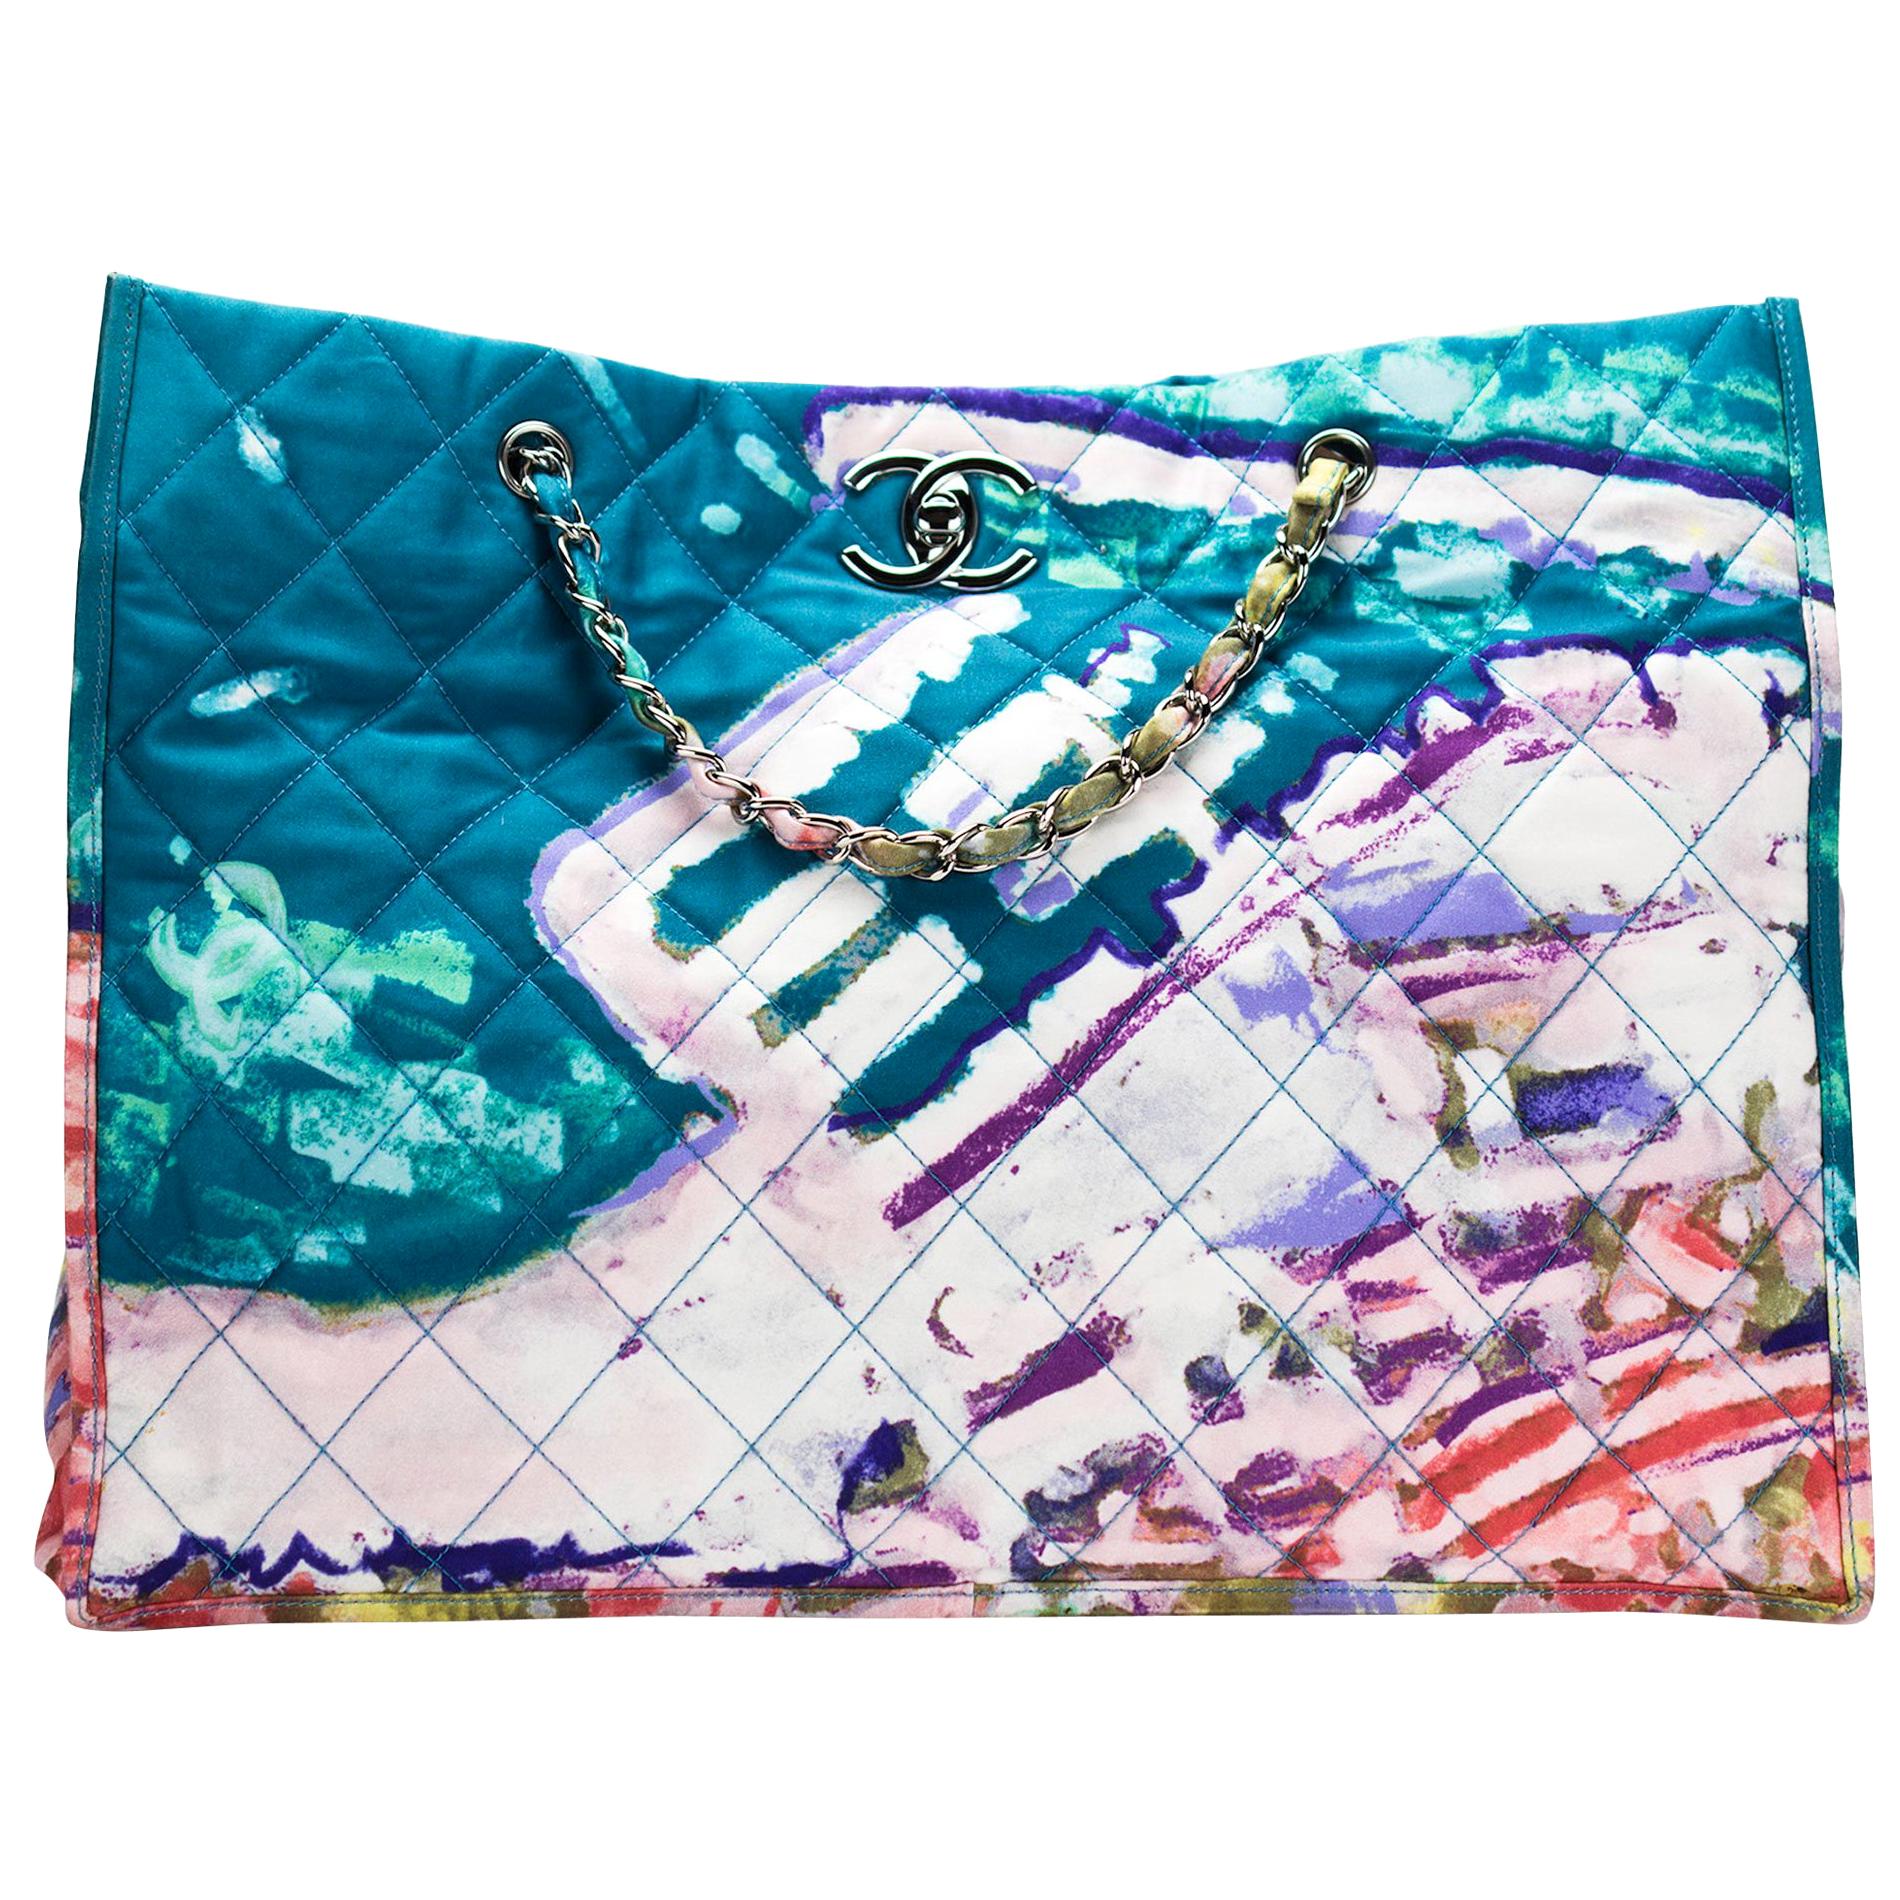 Chanel Graffiti Watercolor Limited Edition Tote Turquoise Nylon Beach Bag